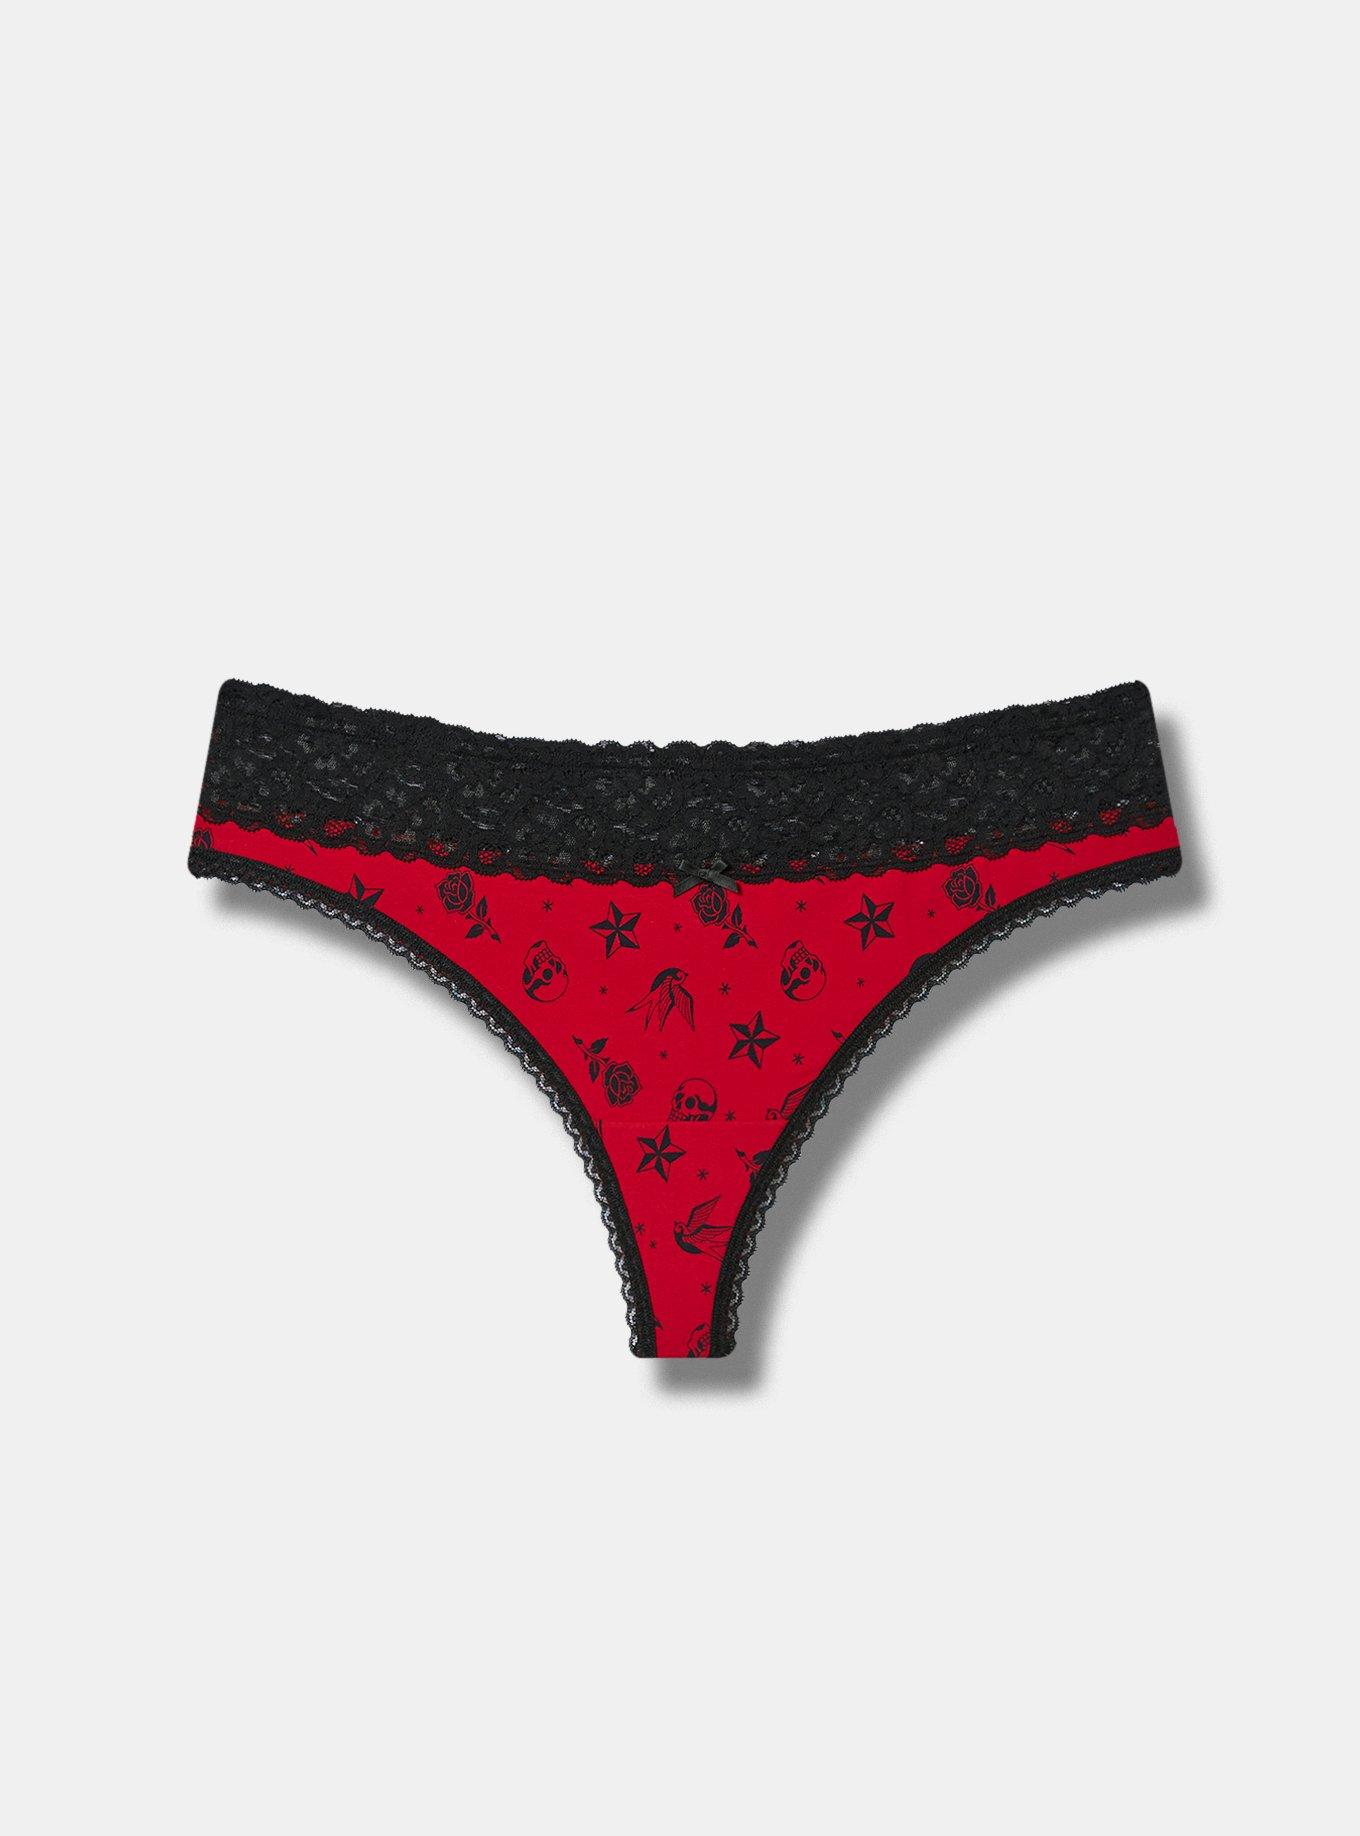 Buy Wink Lace-Trim Hiphugger Panty - Order Panties online